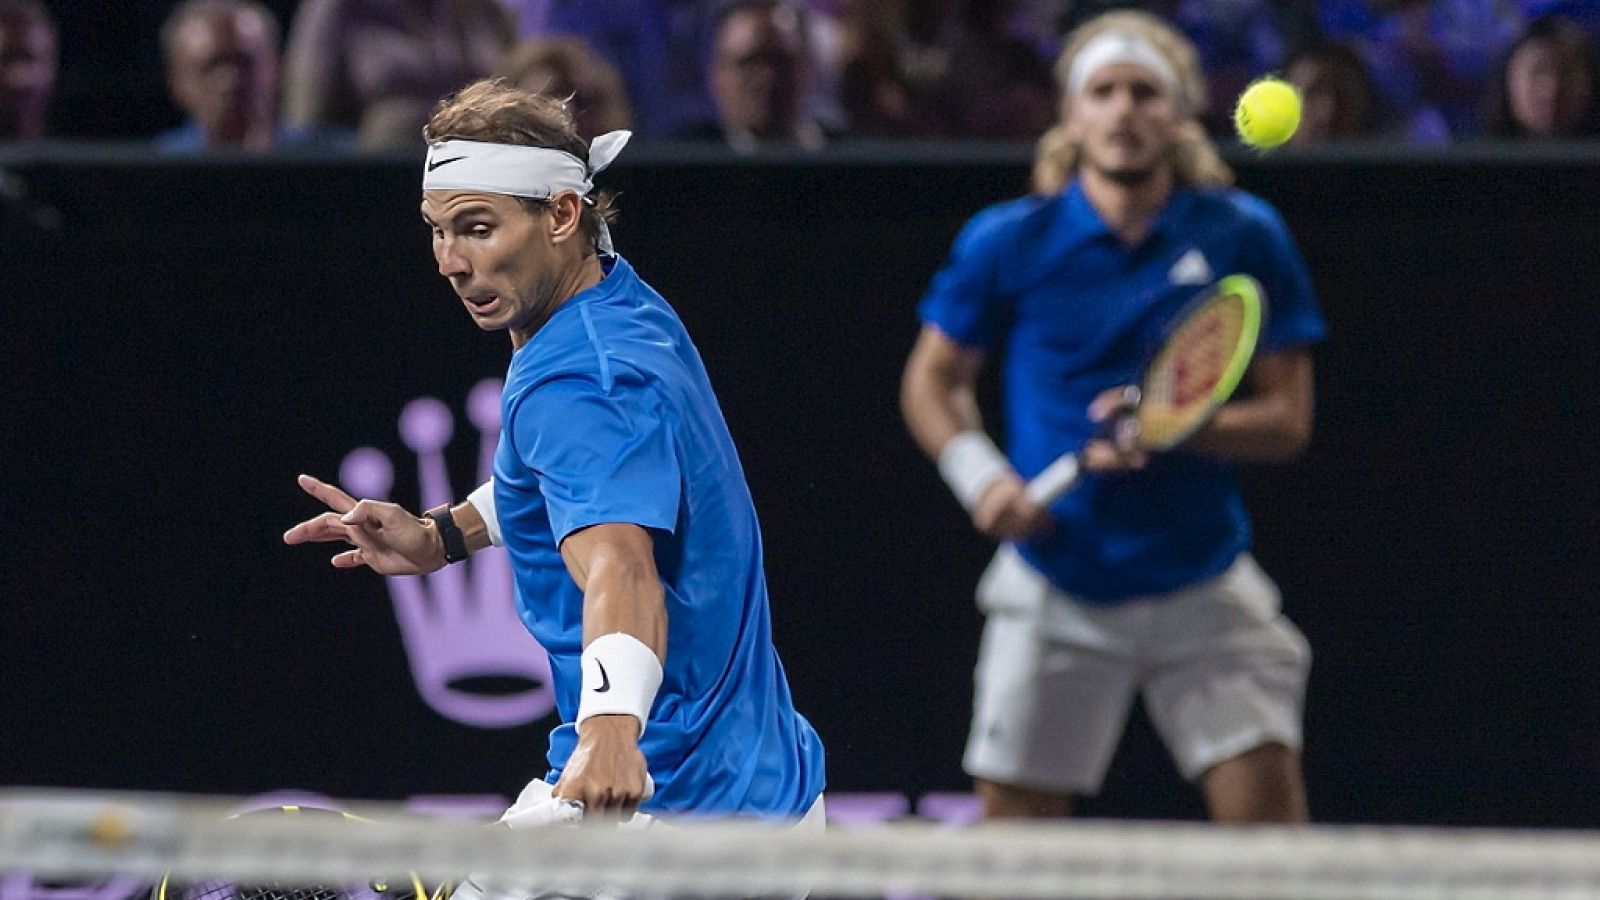 Tenis - Laver Cup 2019. 8º partido dobles: Nadal/Tsitsipas - Kyrgios/Sock